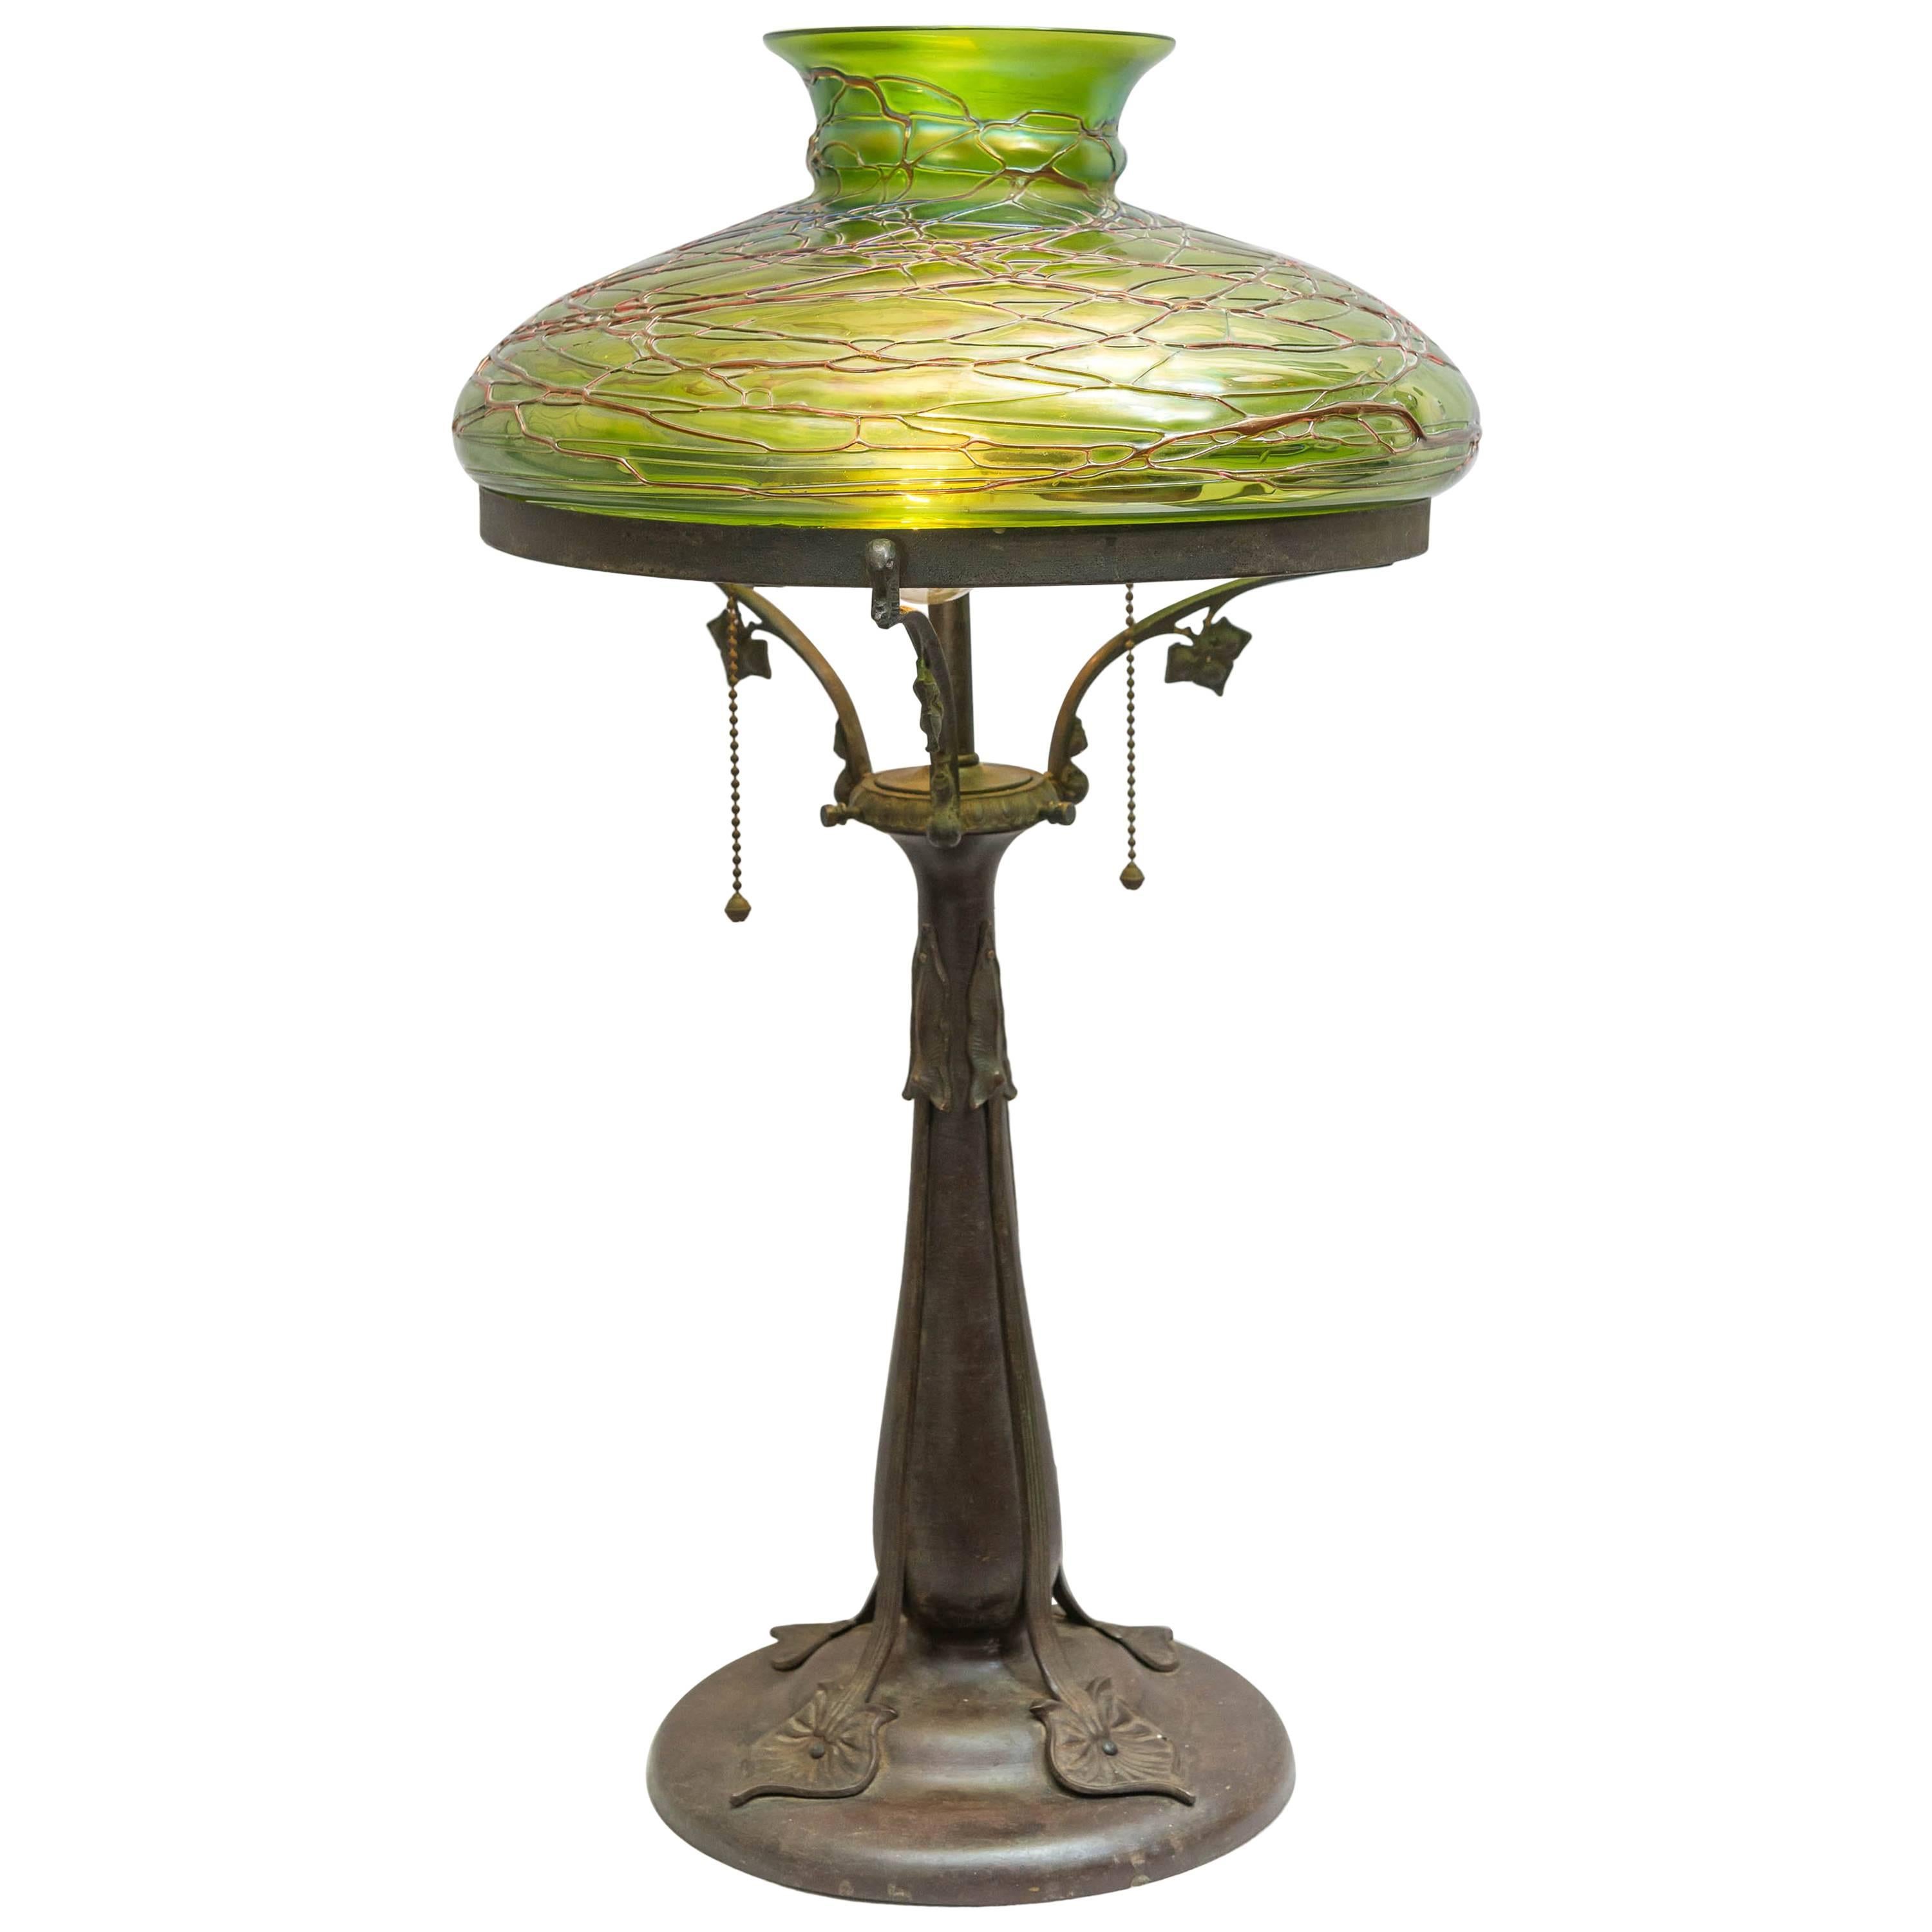 Austrian Art Nouveau Table Lamp with Handblown Shade